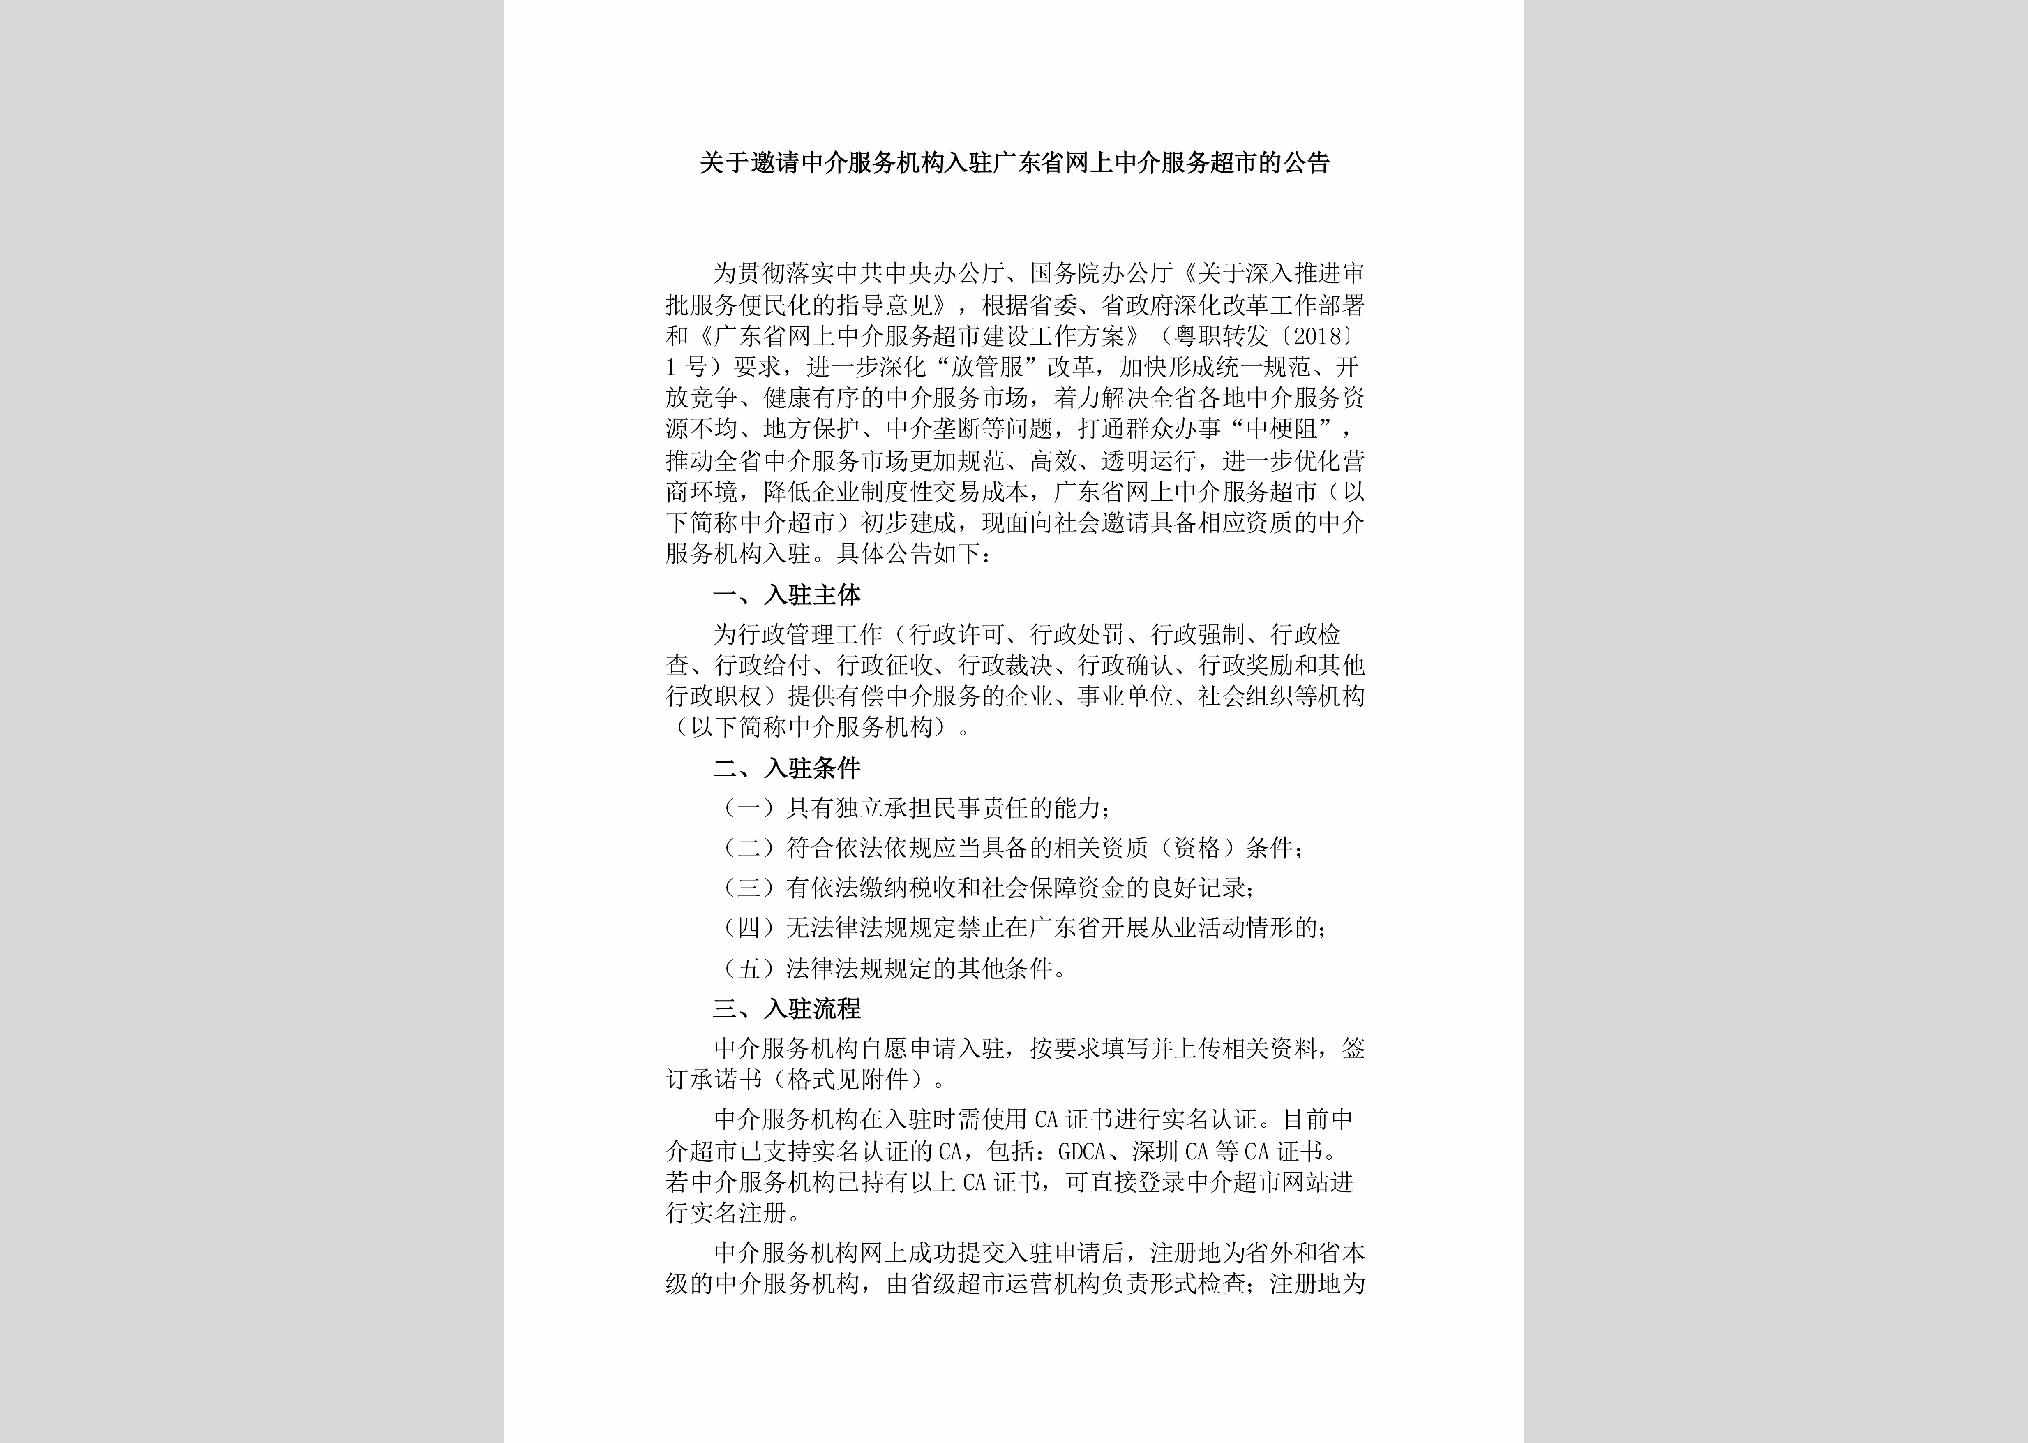 GD-YQZJFWJG-2018：关于邀请中介服务机构入驻广东省网上中介服务超市的公告